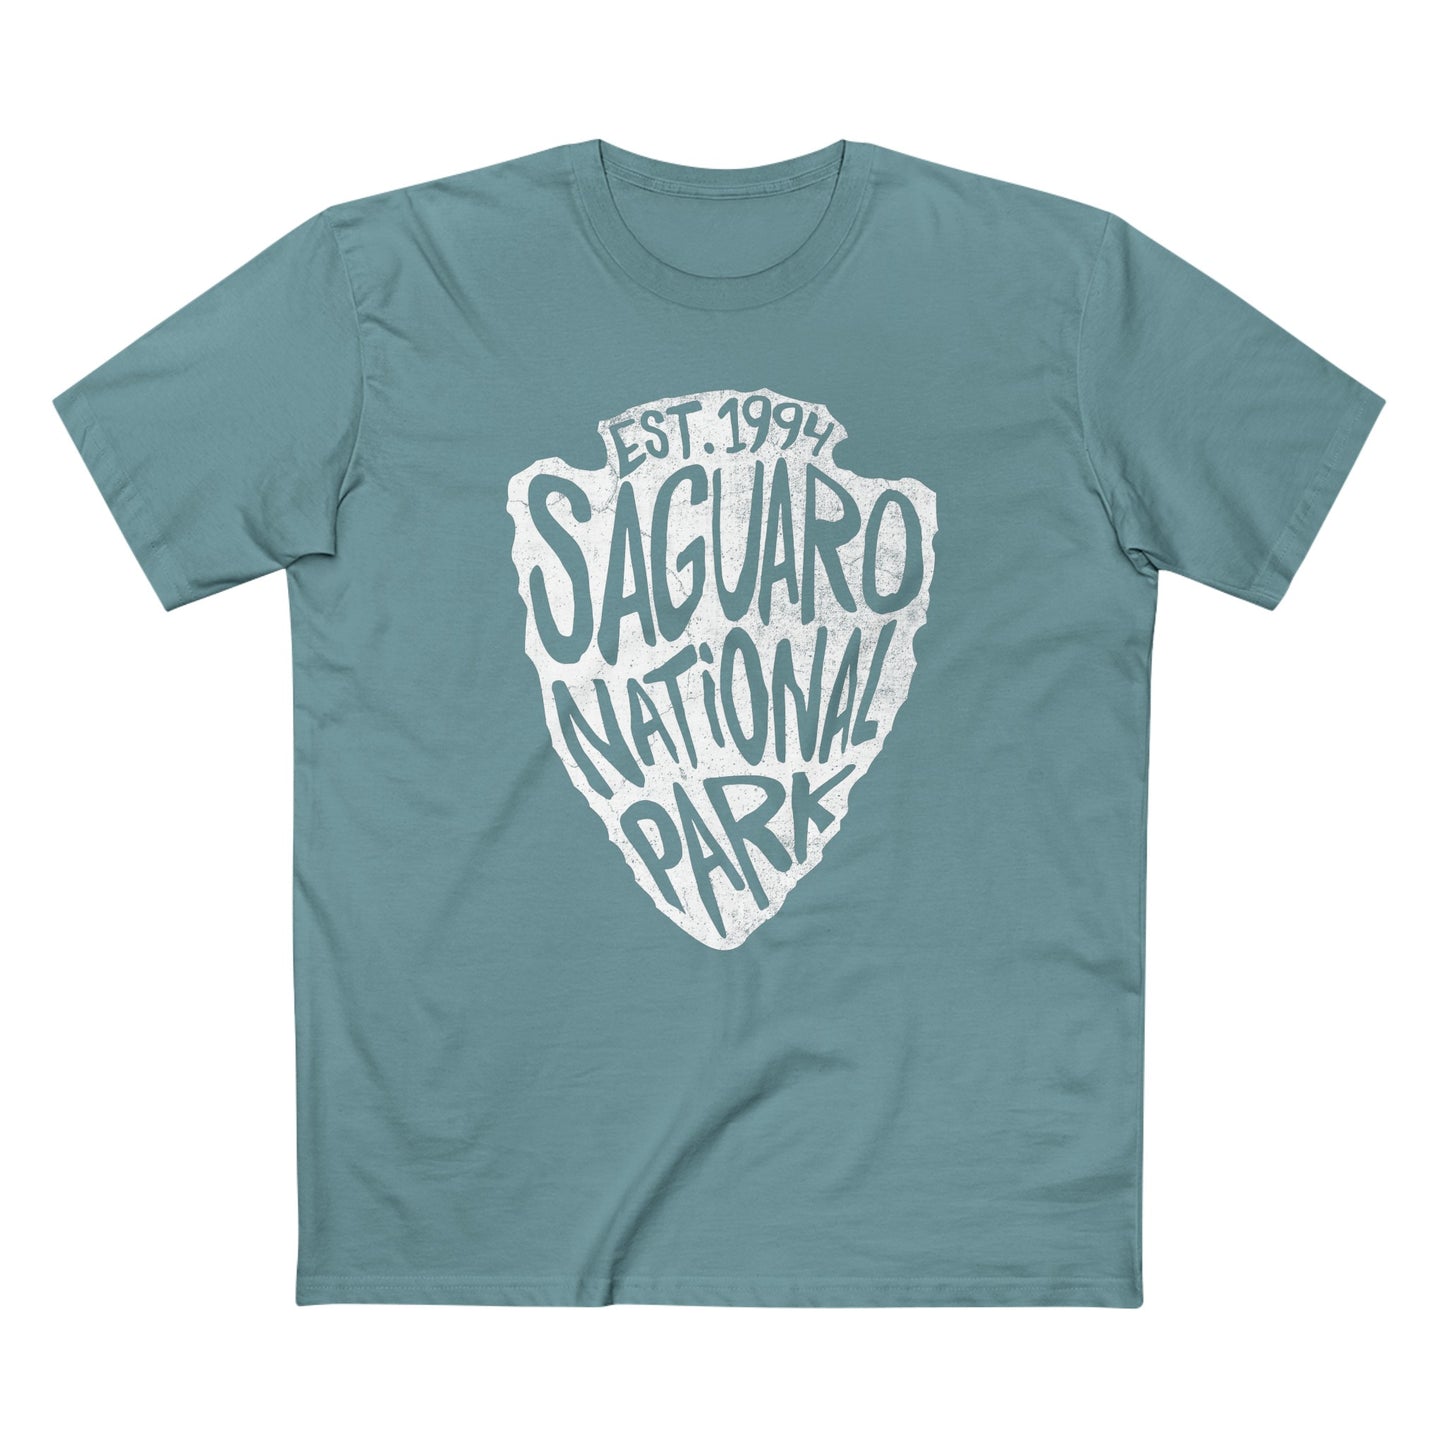 Saguaro National Park T-Shirt - Arrow Head Design